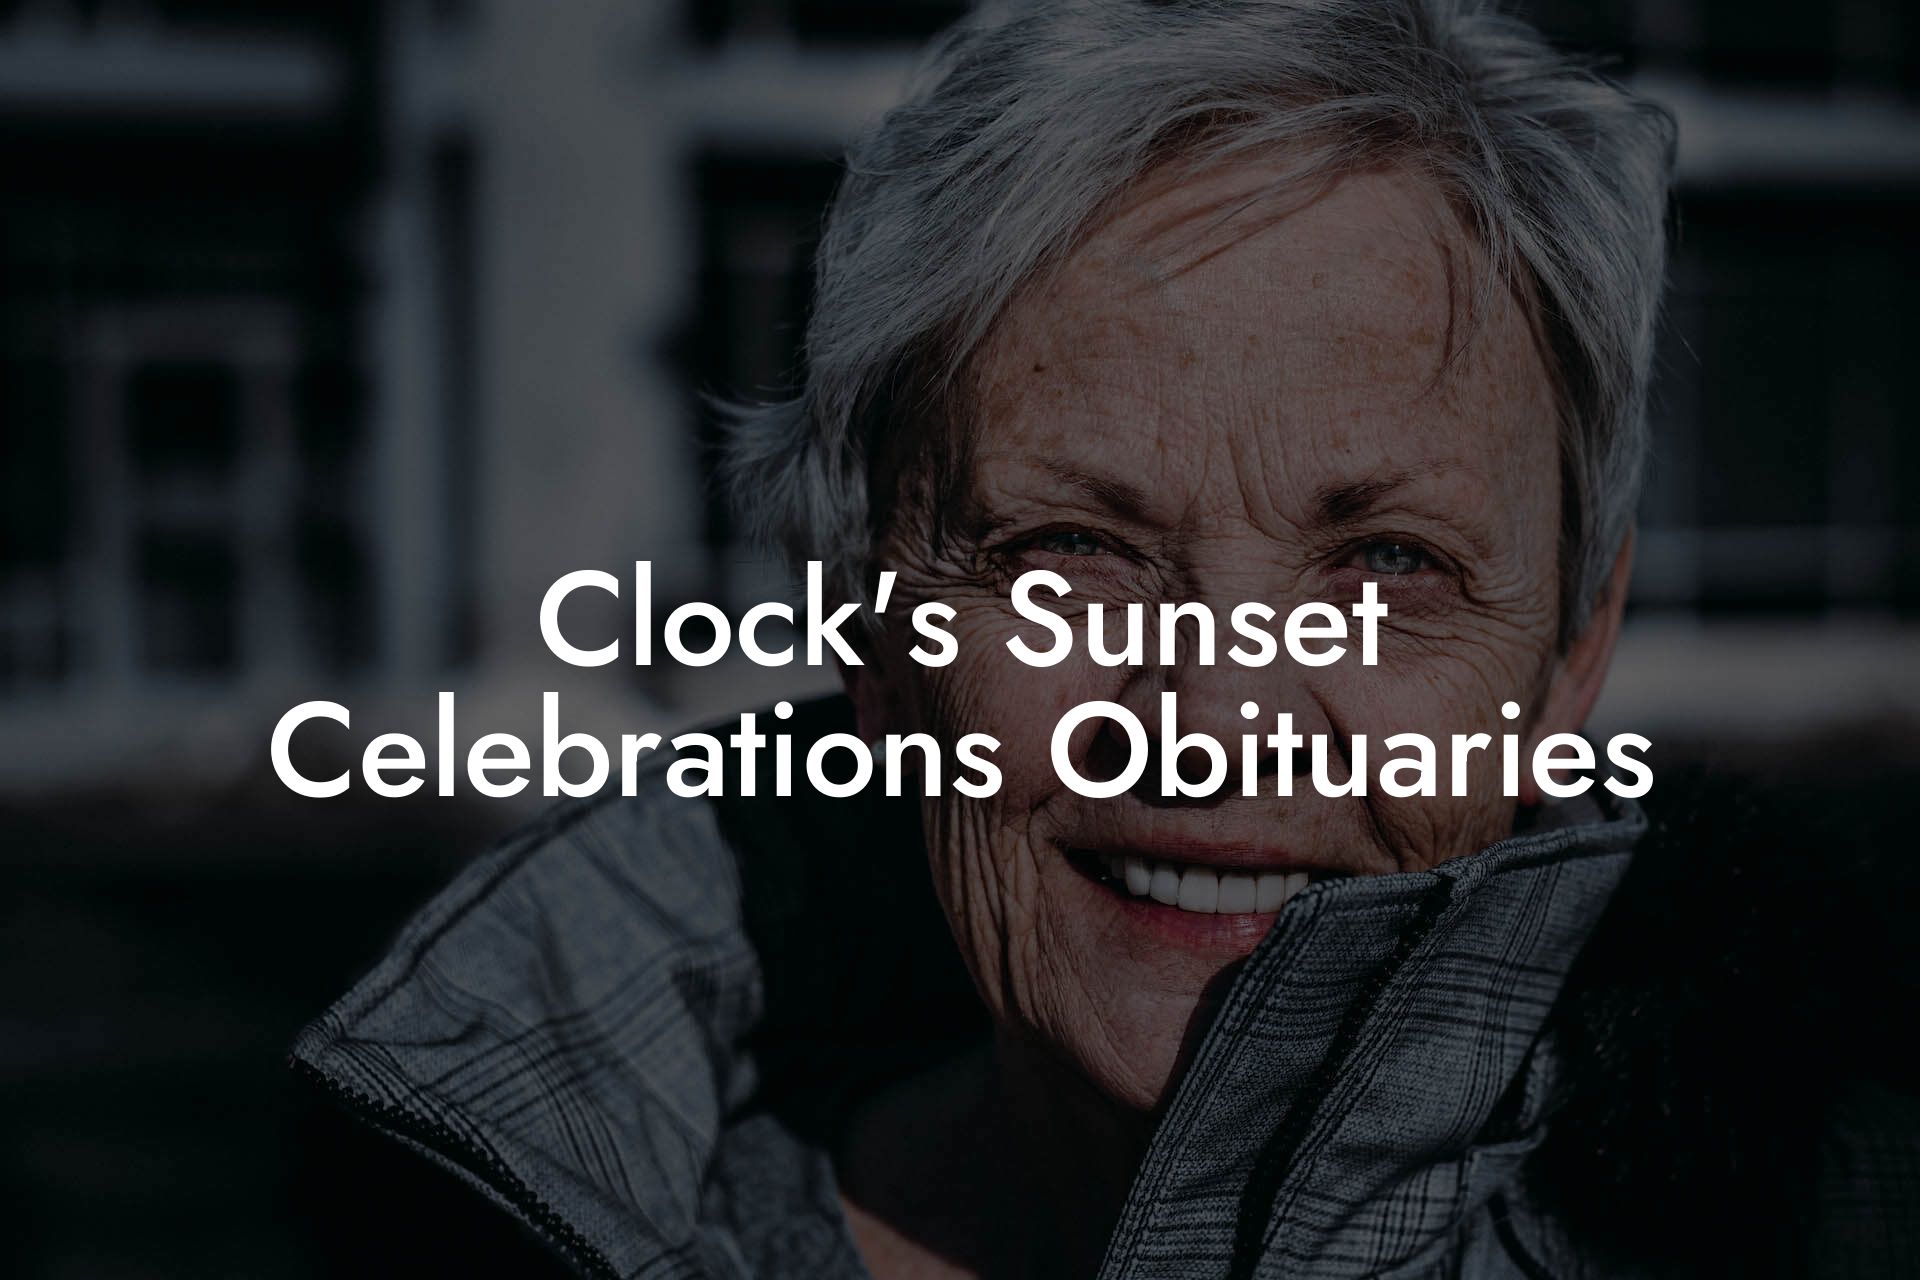 Clock's Sunset Celebrations Obituaries